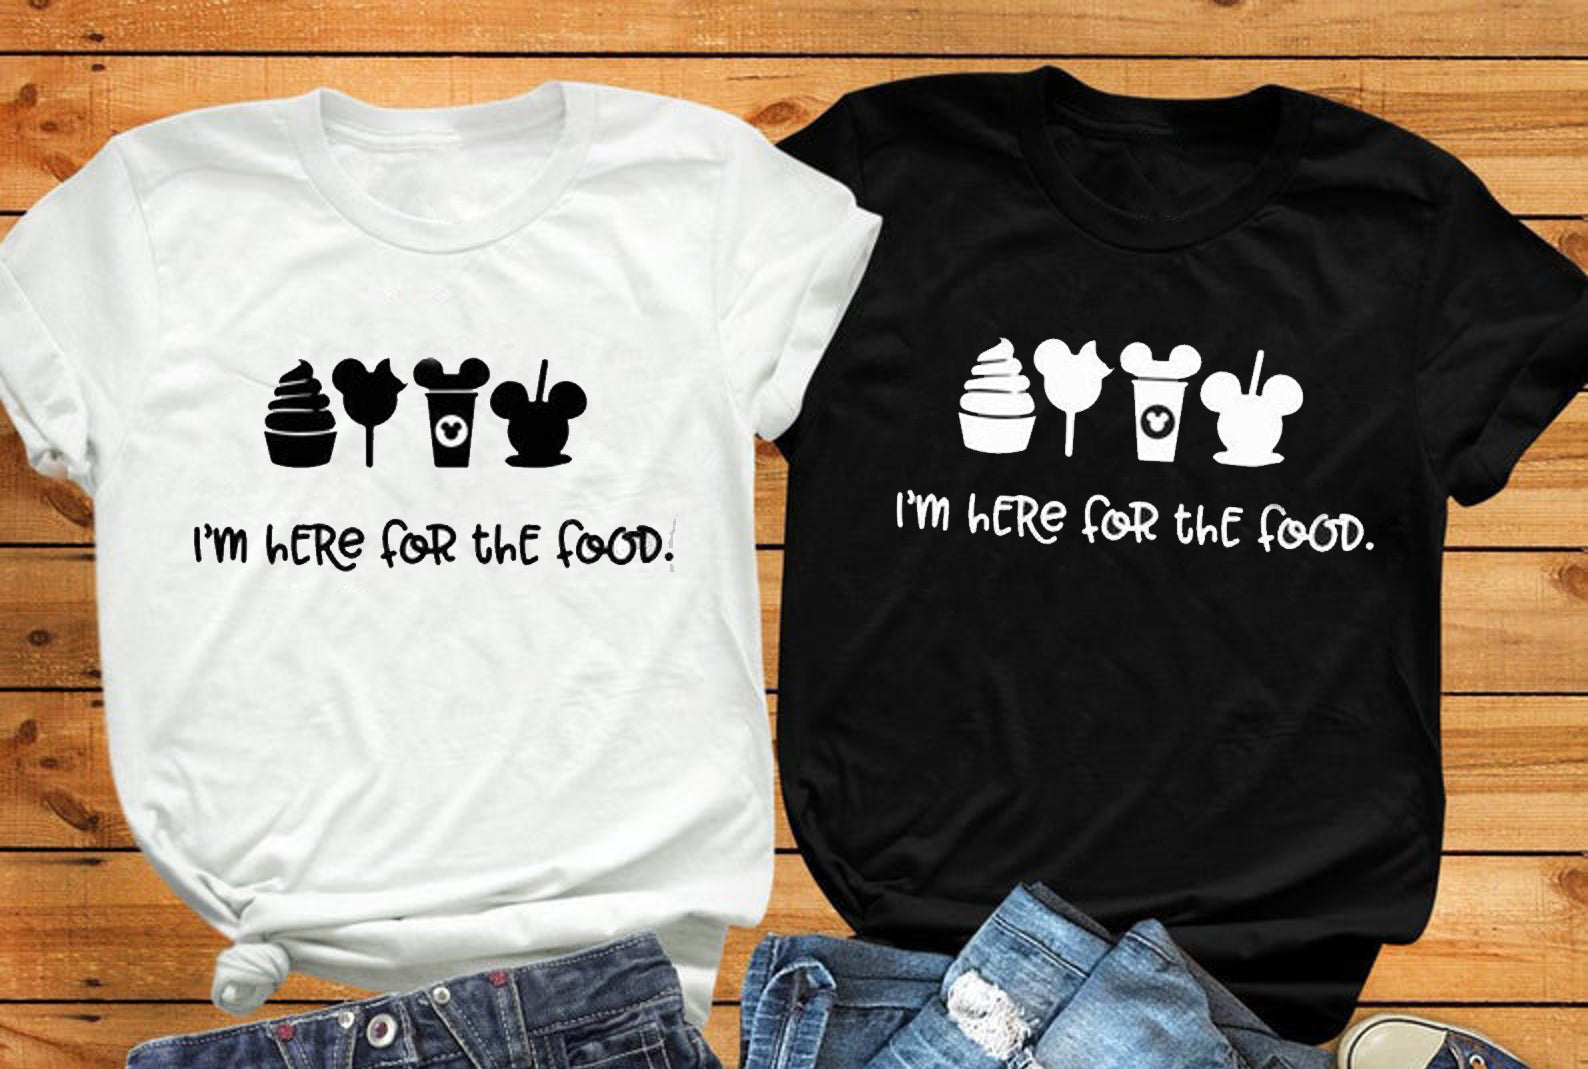 For The Food Disney Shirt -Disney Group Shirts -Disney Family Shirts - Disney Shirts - Disney Apparel - Custom Disney Shirts - Cool Mickey